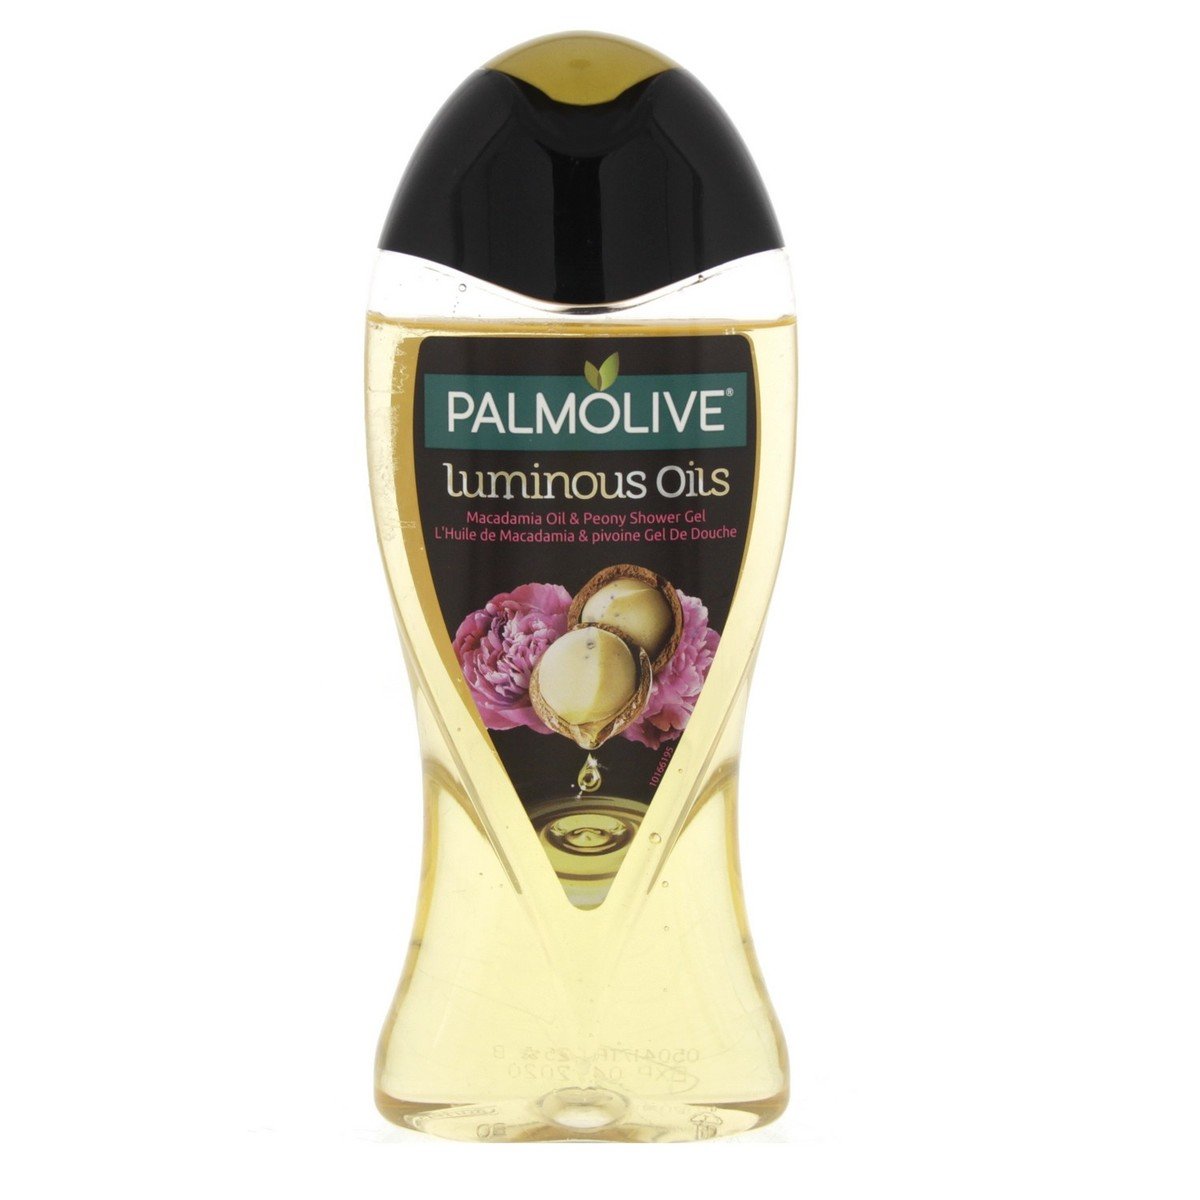 Palmolive Luminous Oils Macadamia Oil And Peony Shower Gel 250 ml